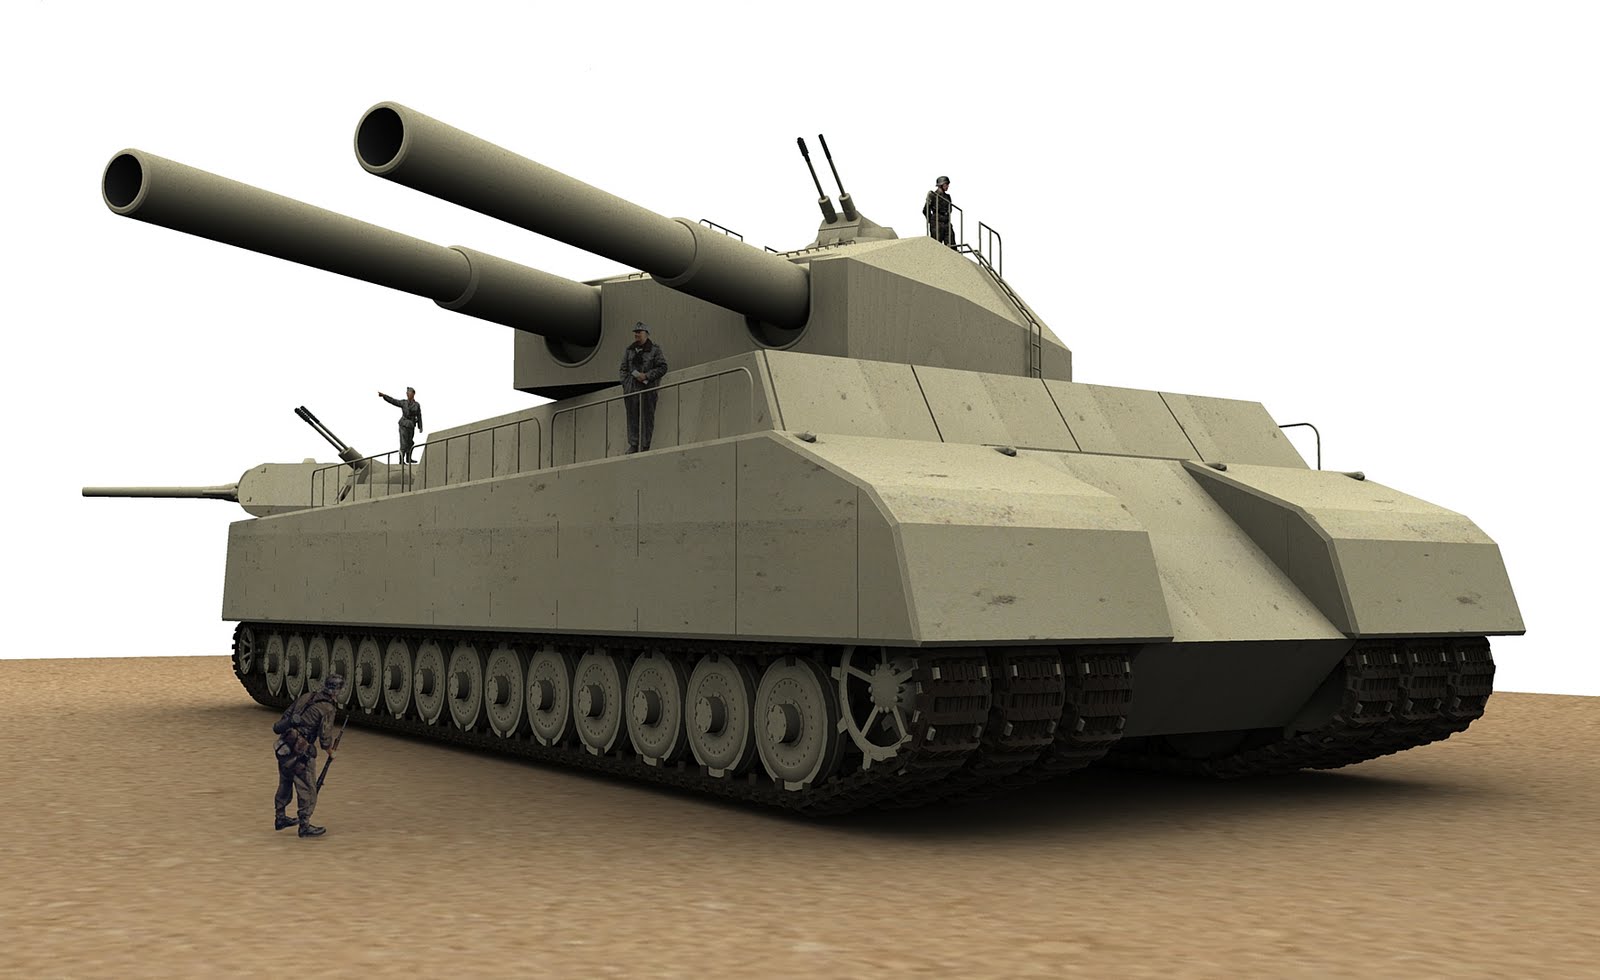 Tank 1000. Танк p1000 Ratte. Танк Landkreuzer p1000 Ratte. Ленд Крузер п 1000 РАТТЕ. Немецкий сверхтяжелый танк крыса.